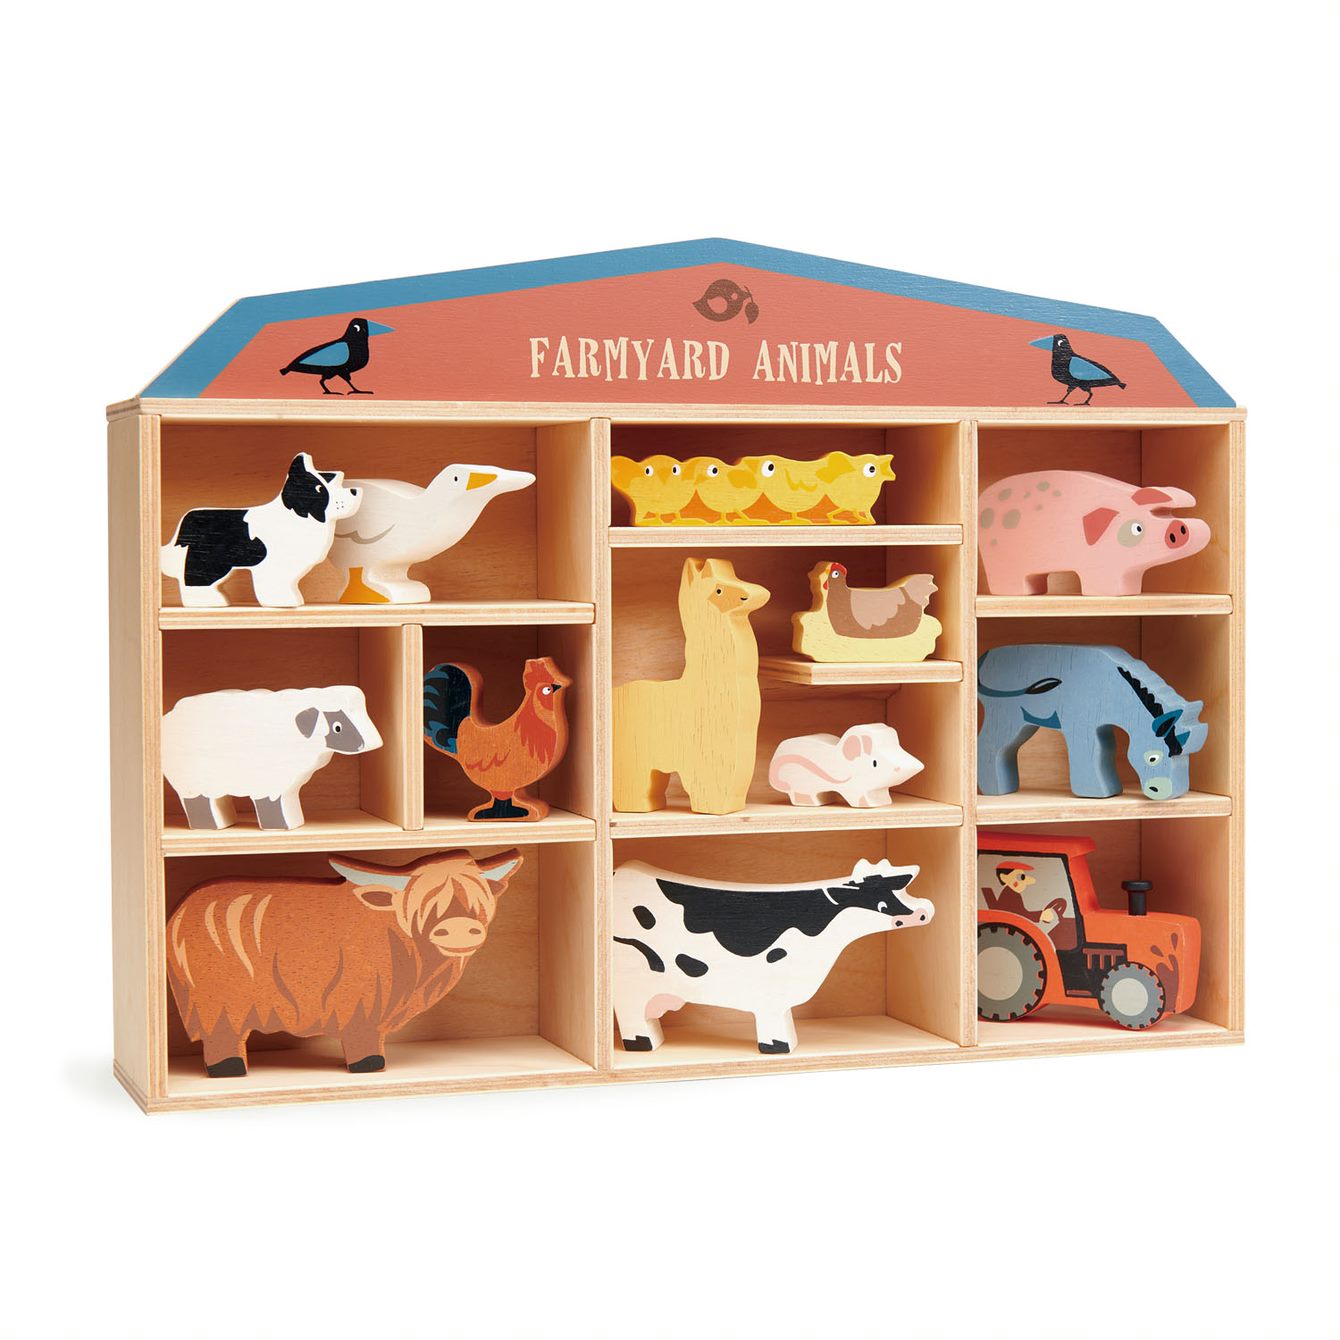 Wooden Farmyard Animals & Shelf Set